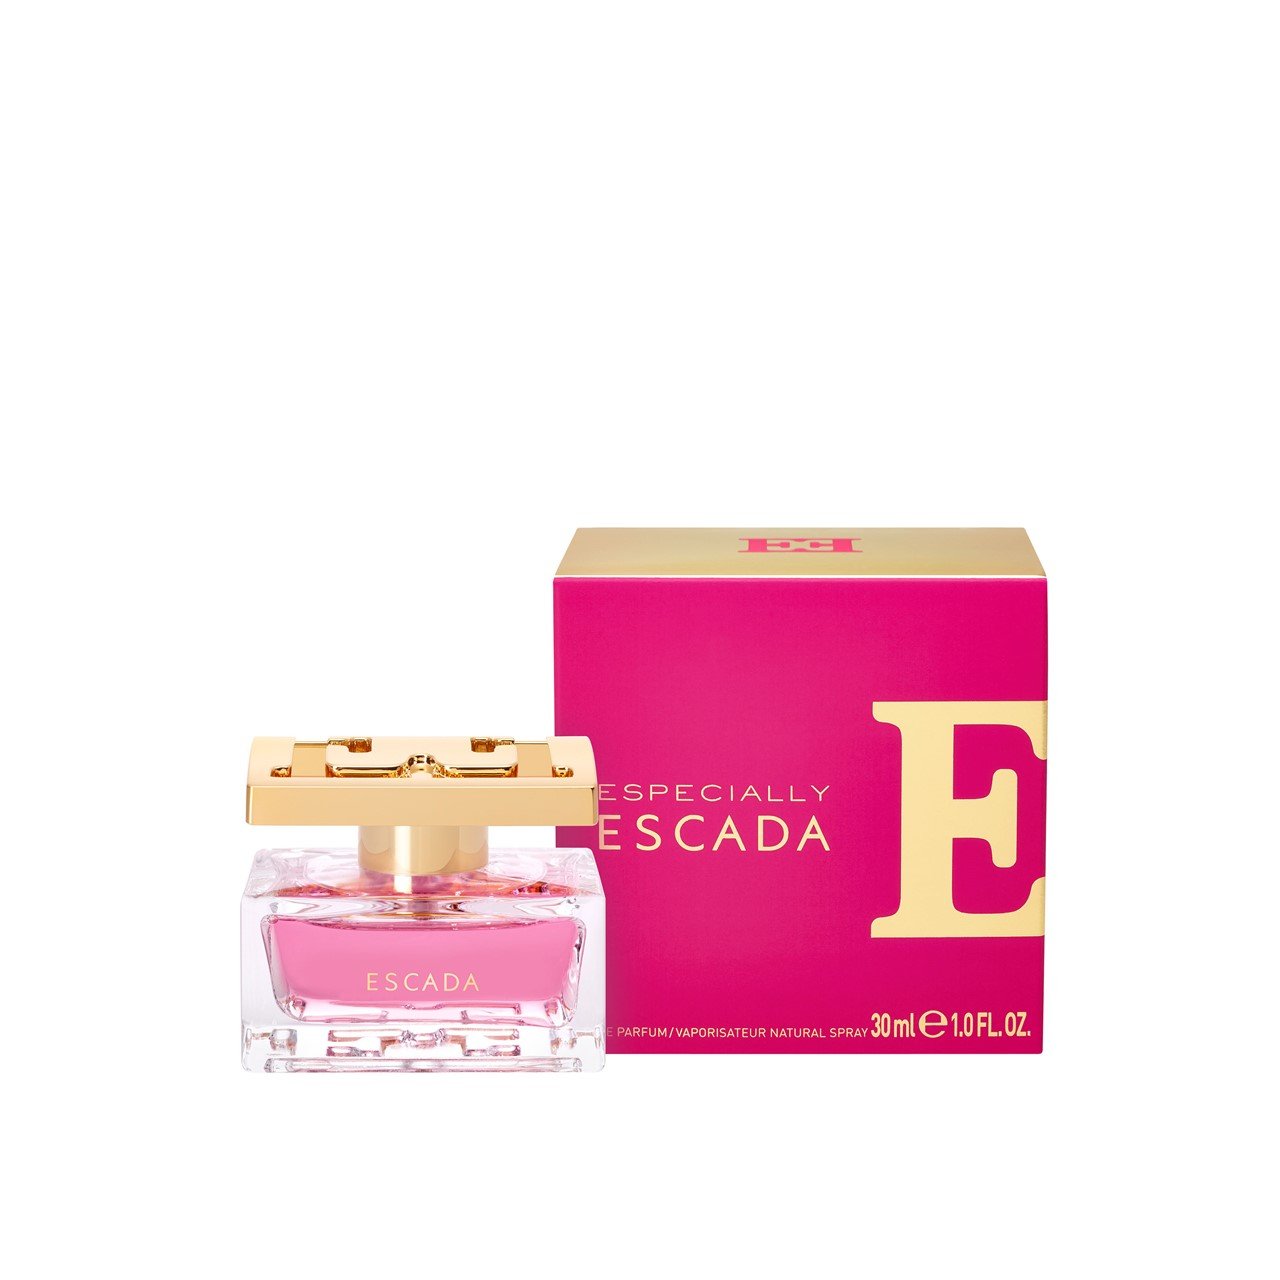 Buy Eau de Parfum (1.0fl oz) USA